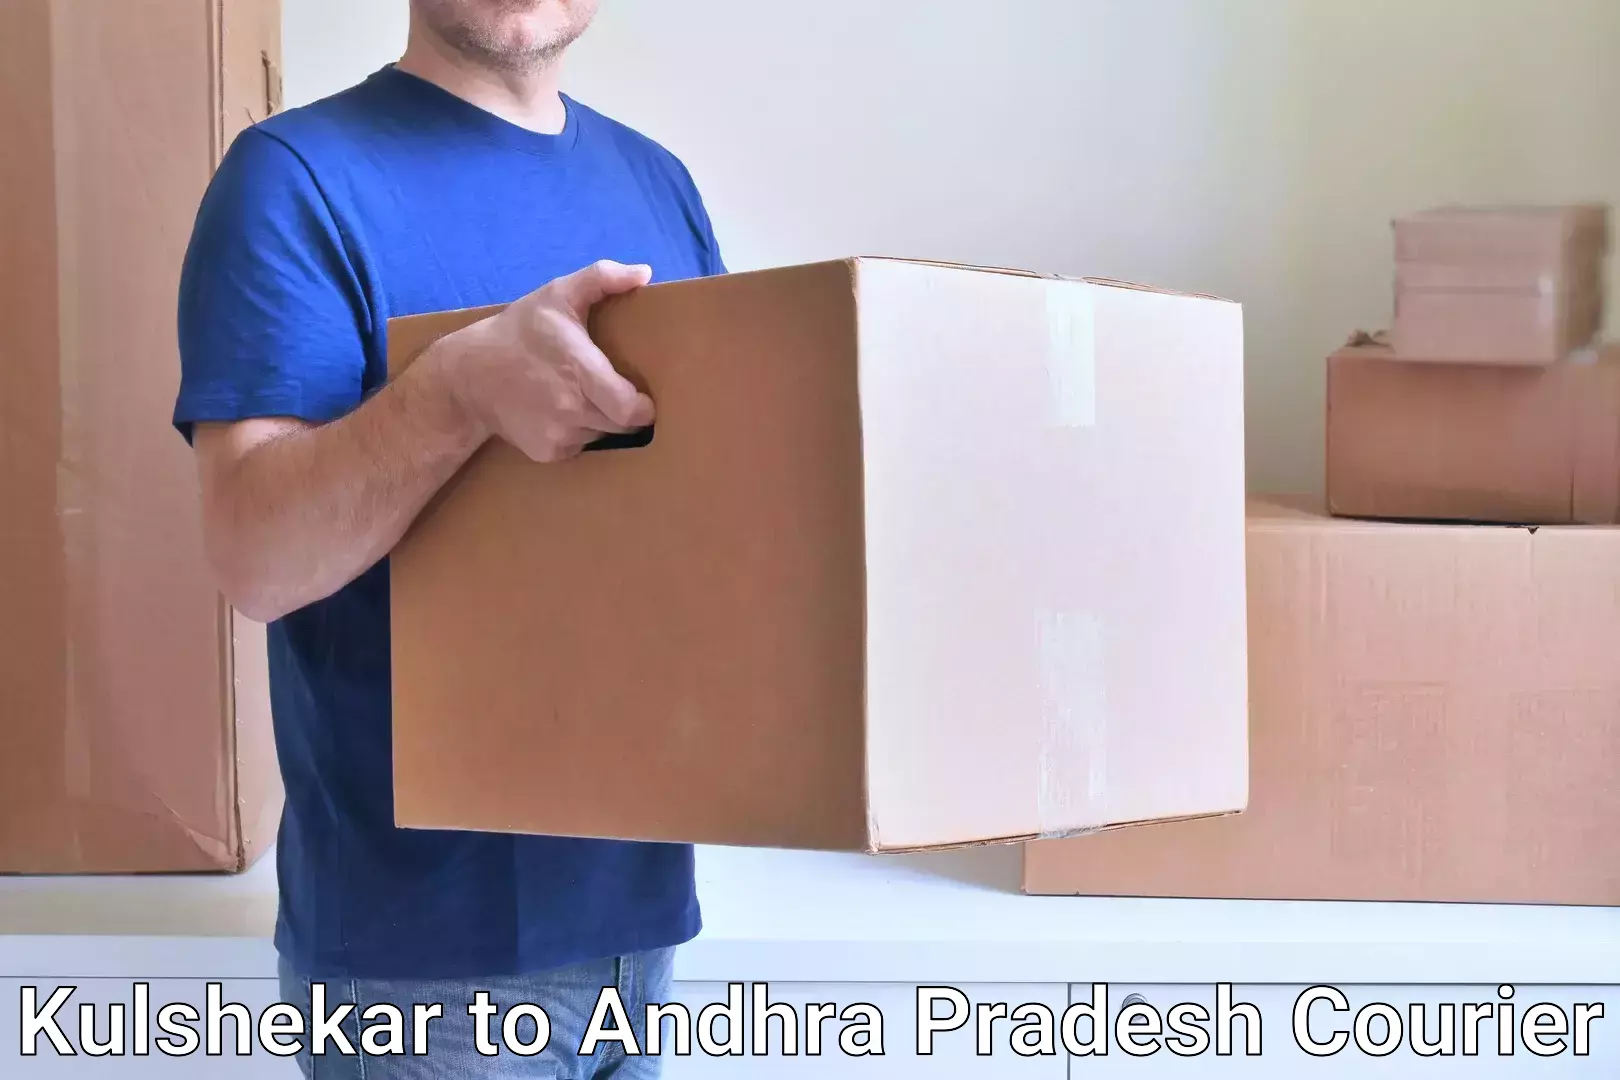 Courier service innovation Kulshekar to Andhra Pradesh